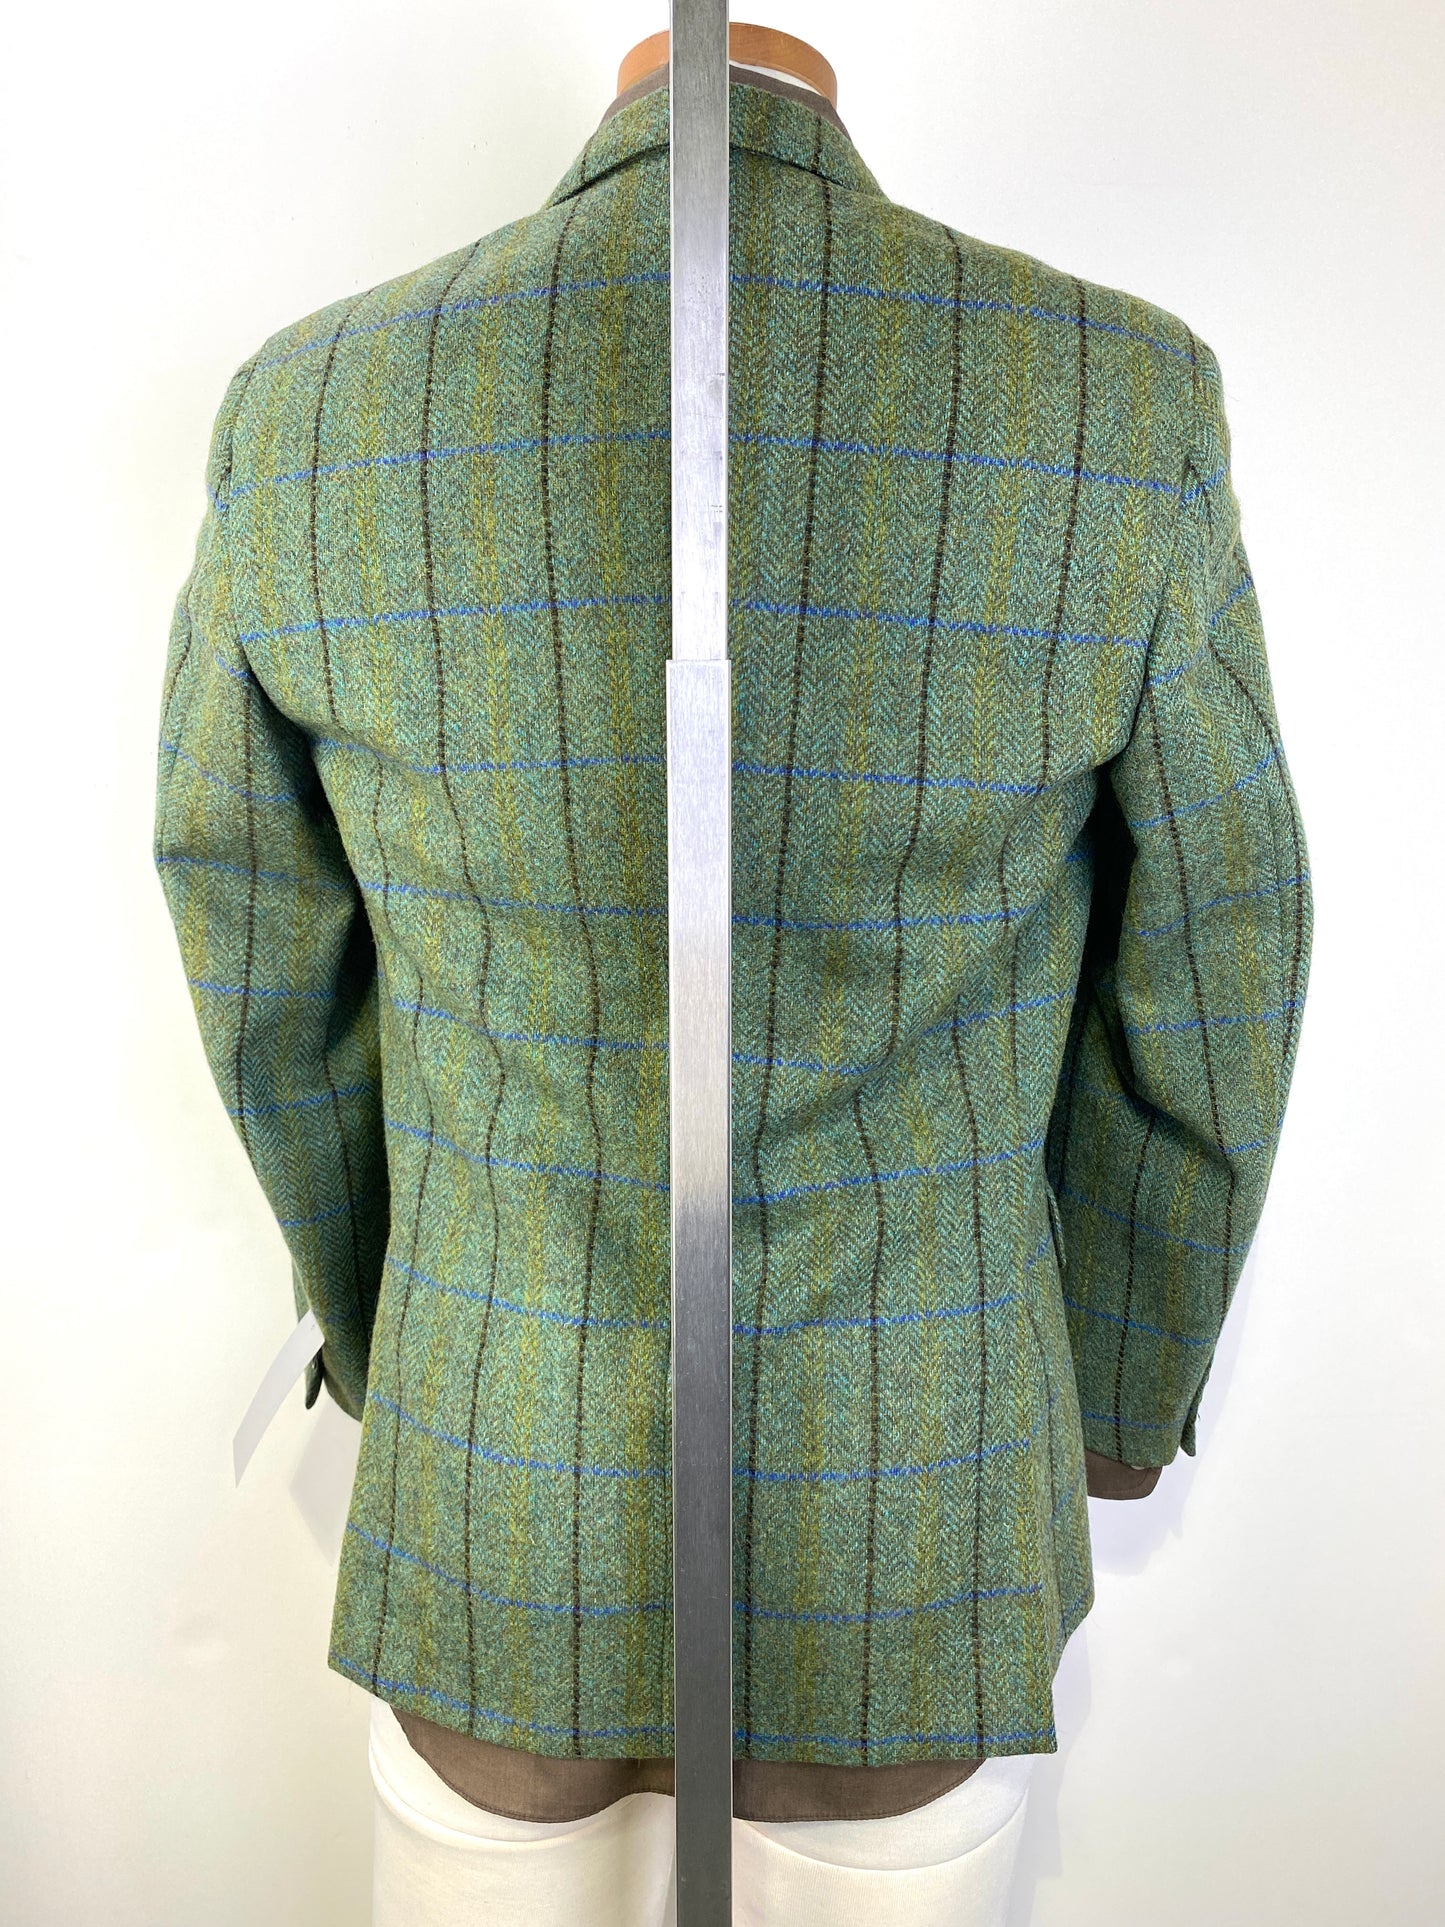 1990s Vintage Men's Bespoke Tweed Blazer, Green Plaid Windowpane Jacket, Arny's Paris, C38